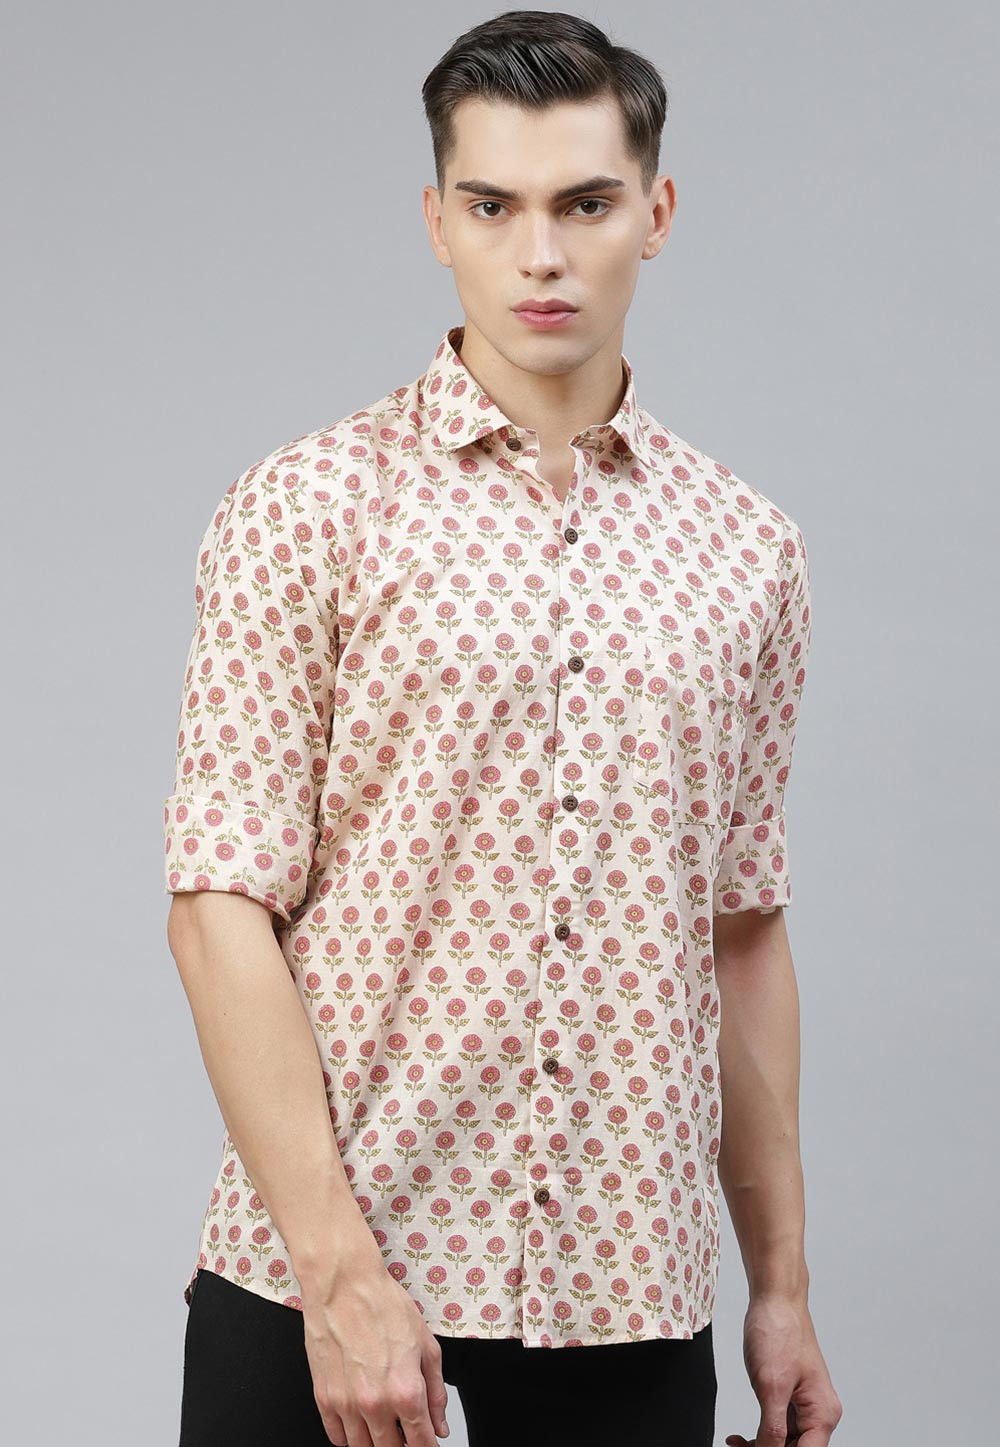 Block Printed Cotton Shirt in Peach : MRE77